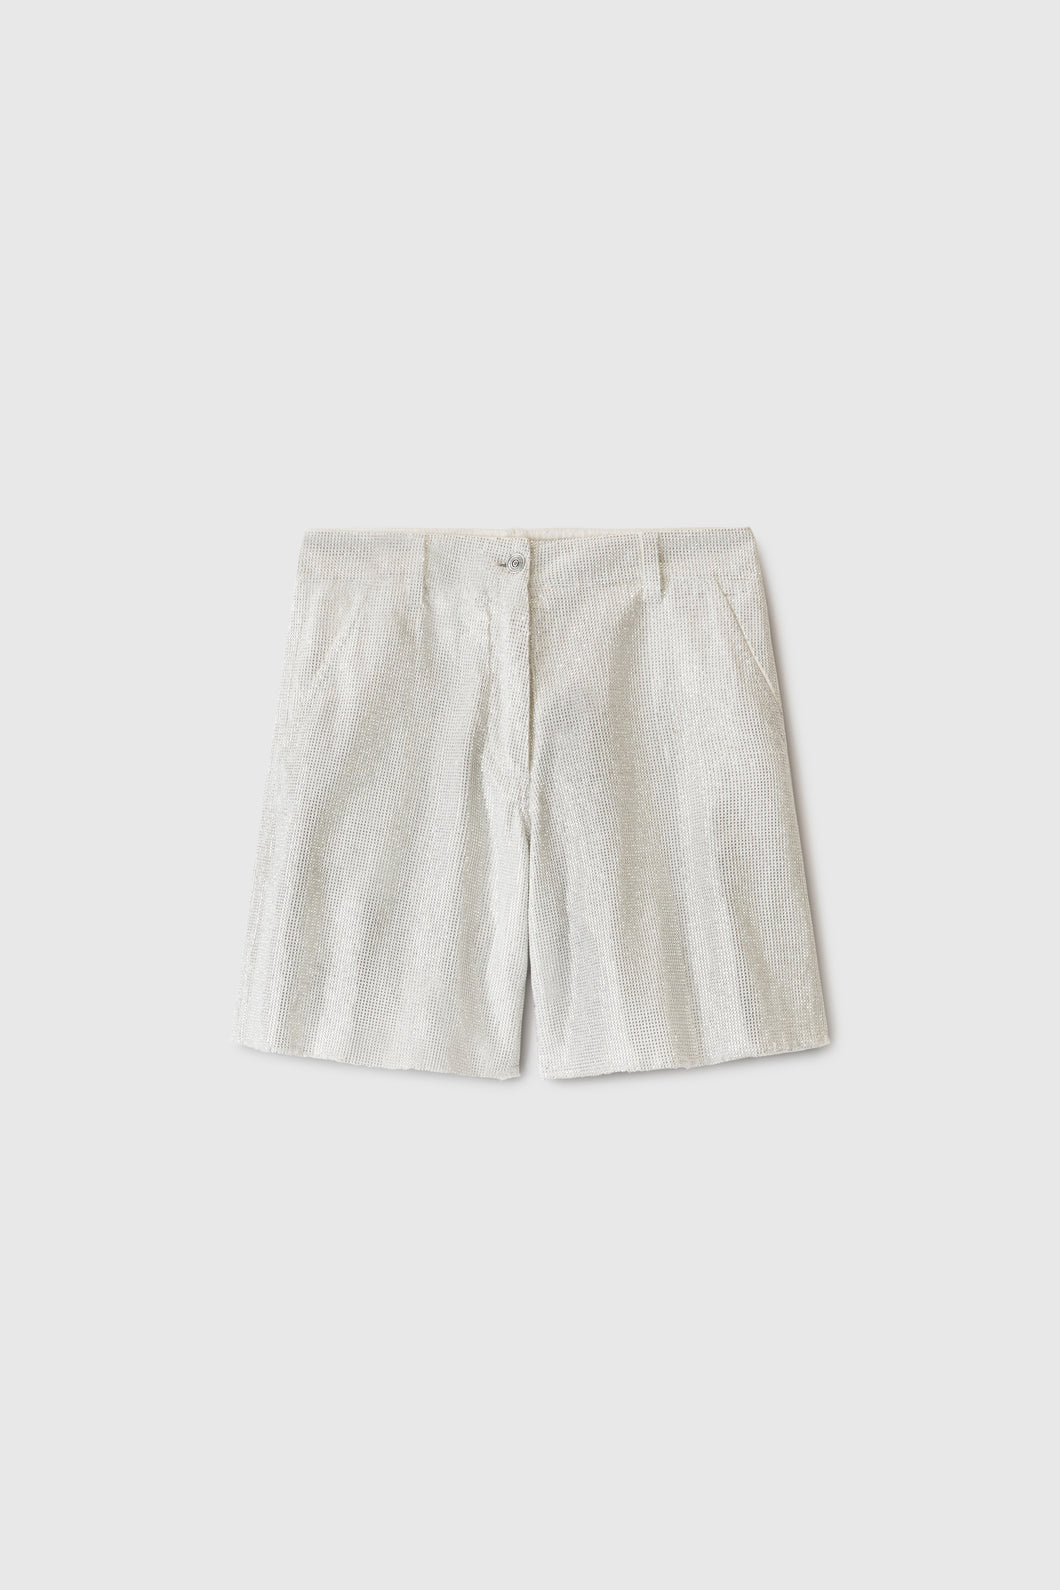 Bermuda shorts with micro studs